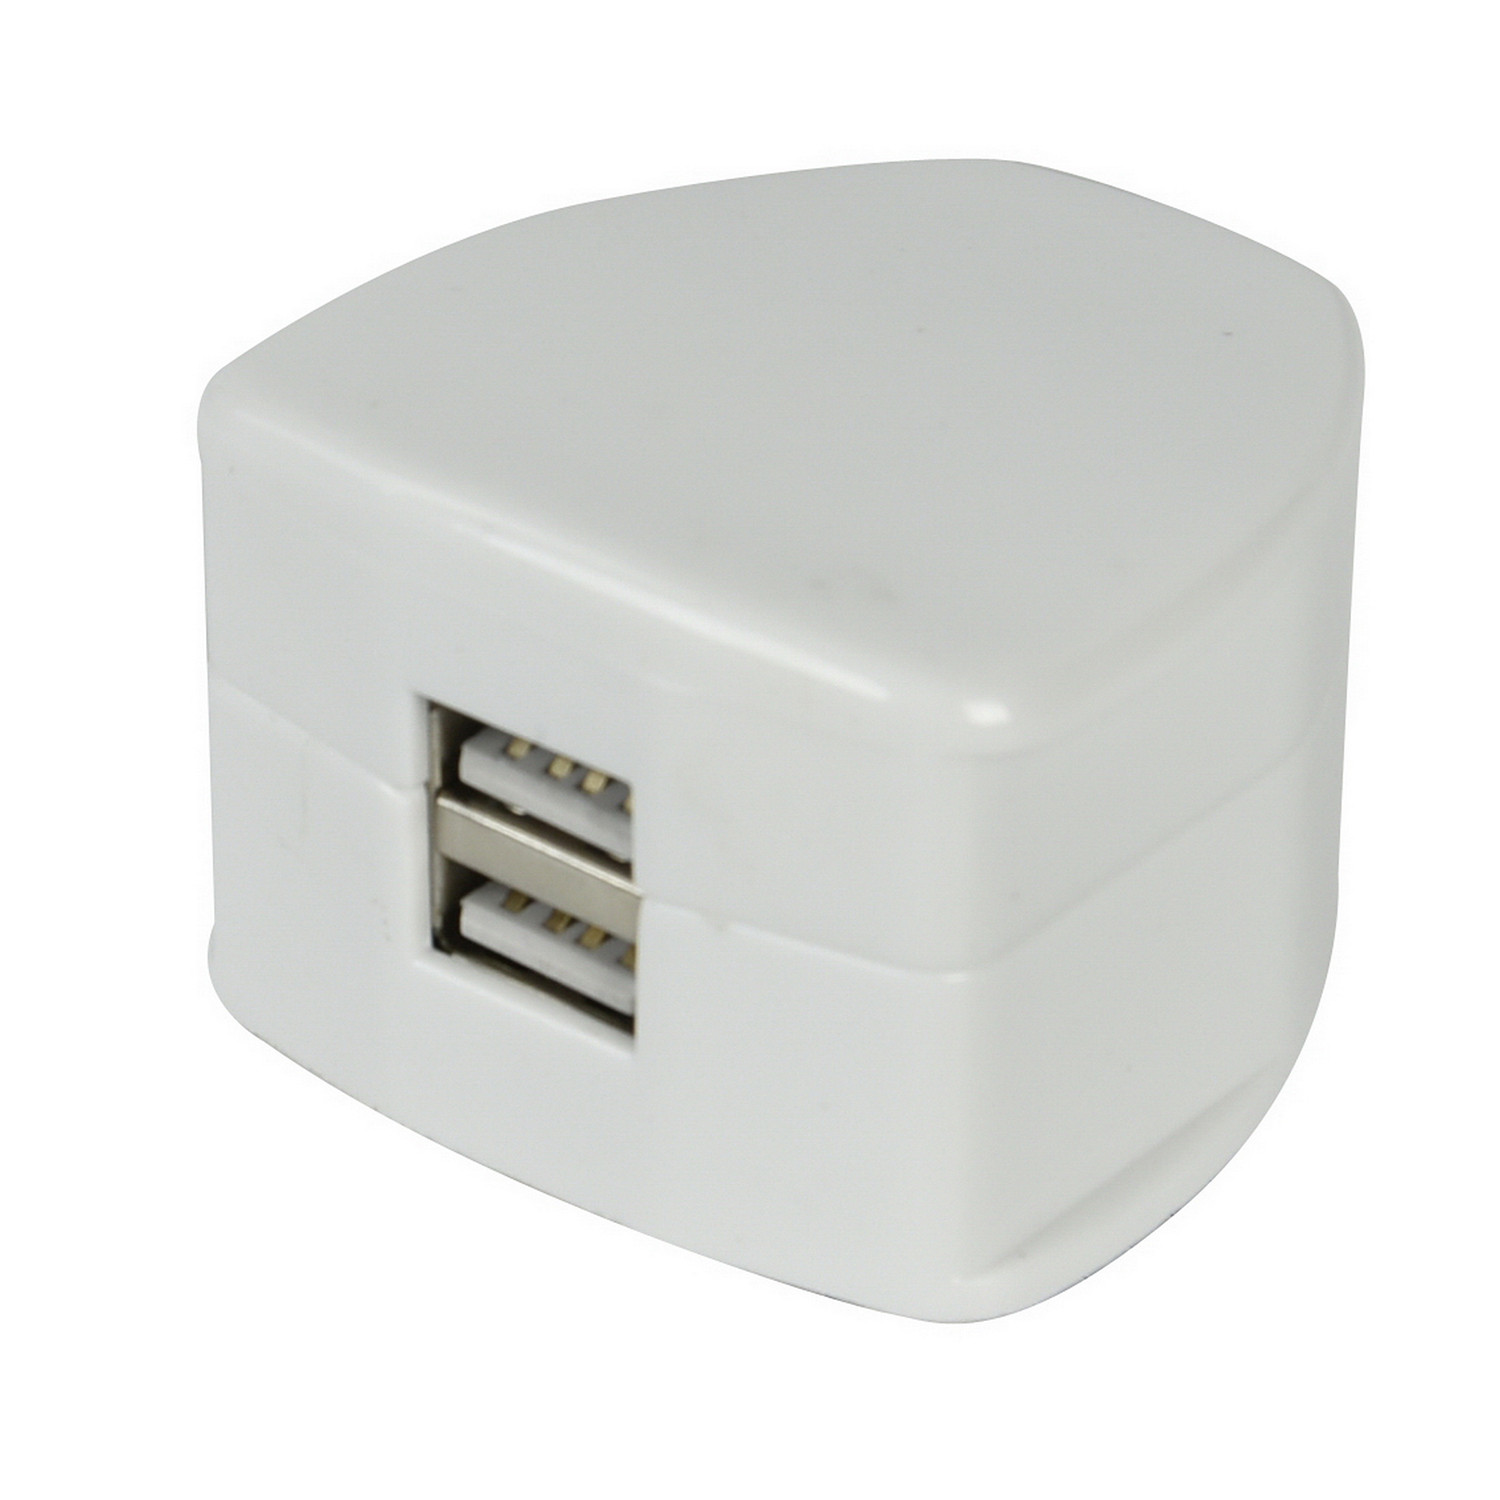 2 USB Port Power Adaptor Image